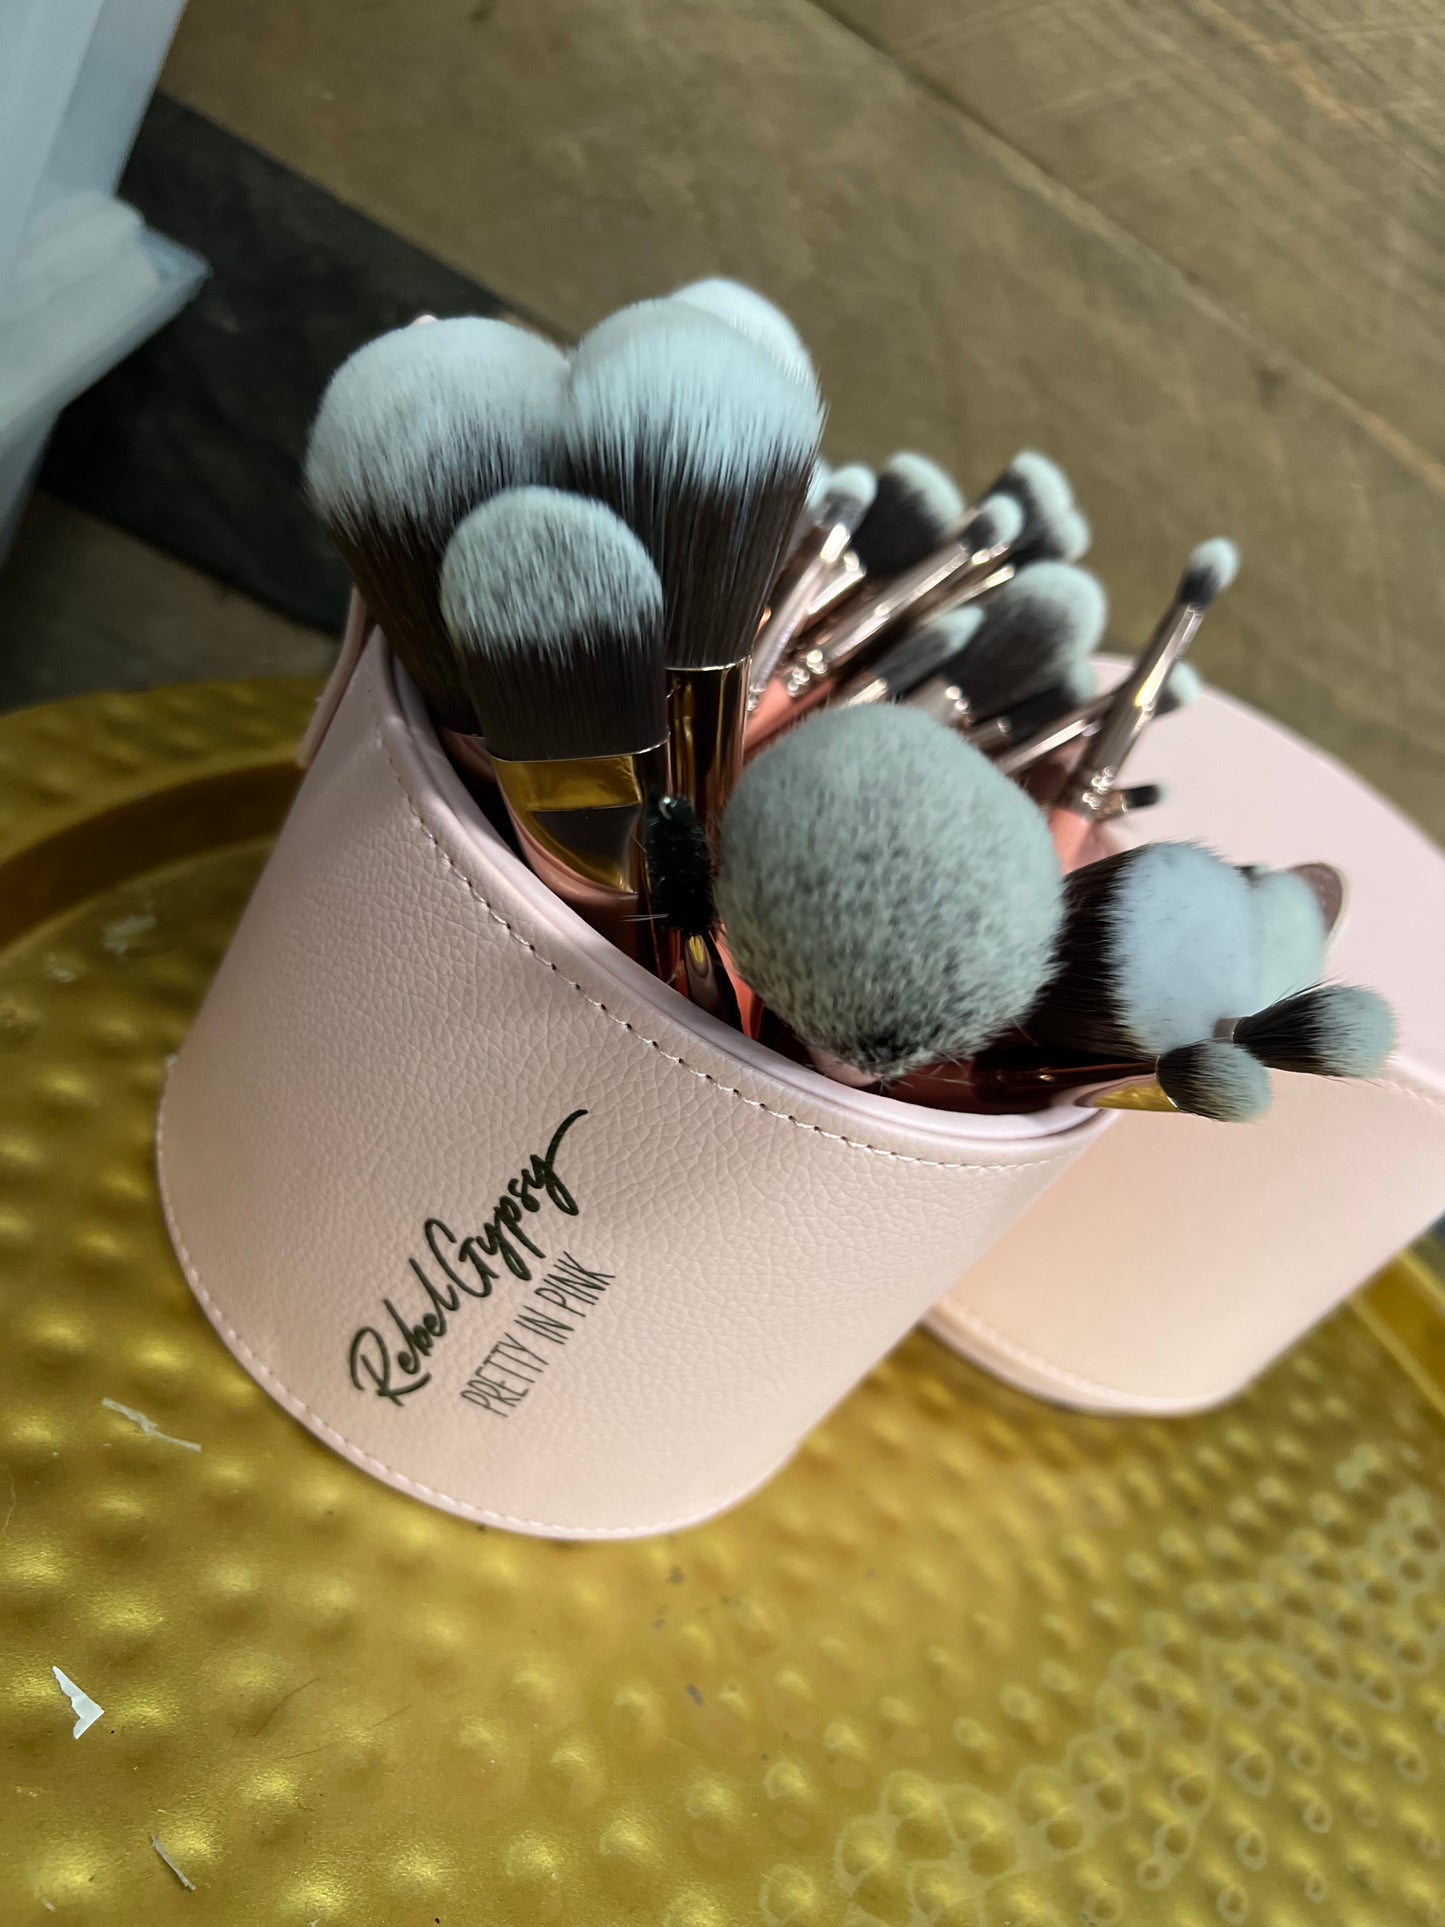 Rebel Gypsy Pretty In Pink Professional Premium Brush Set